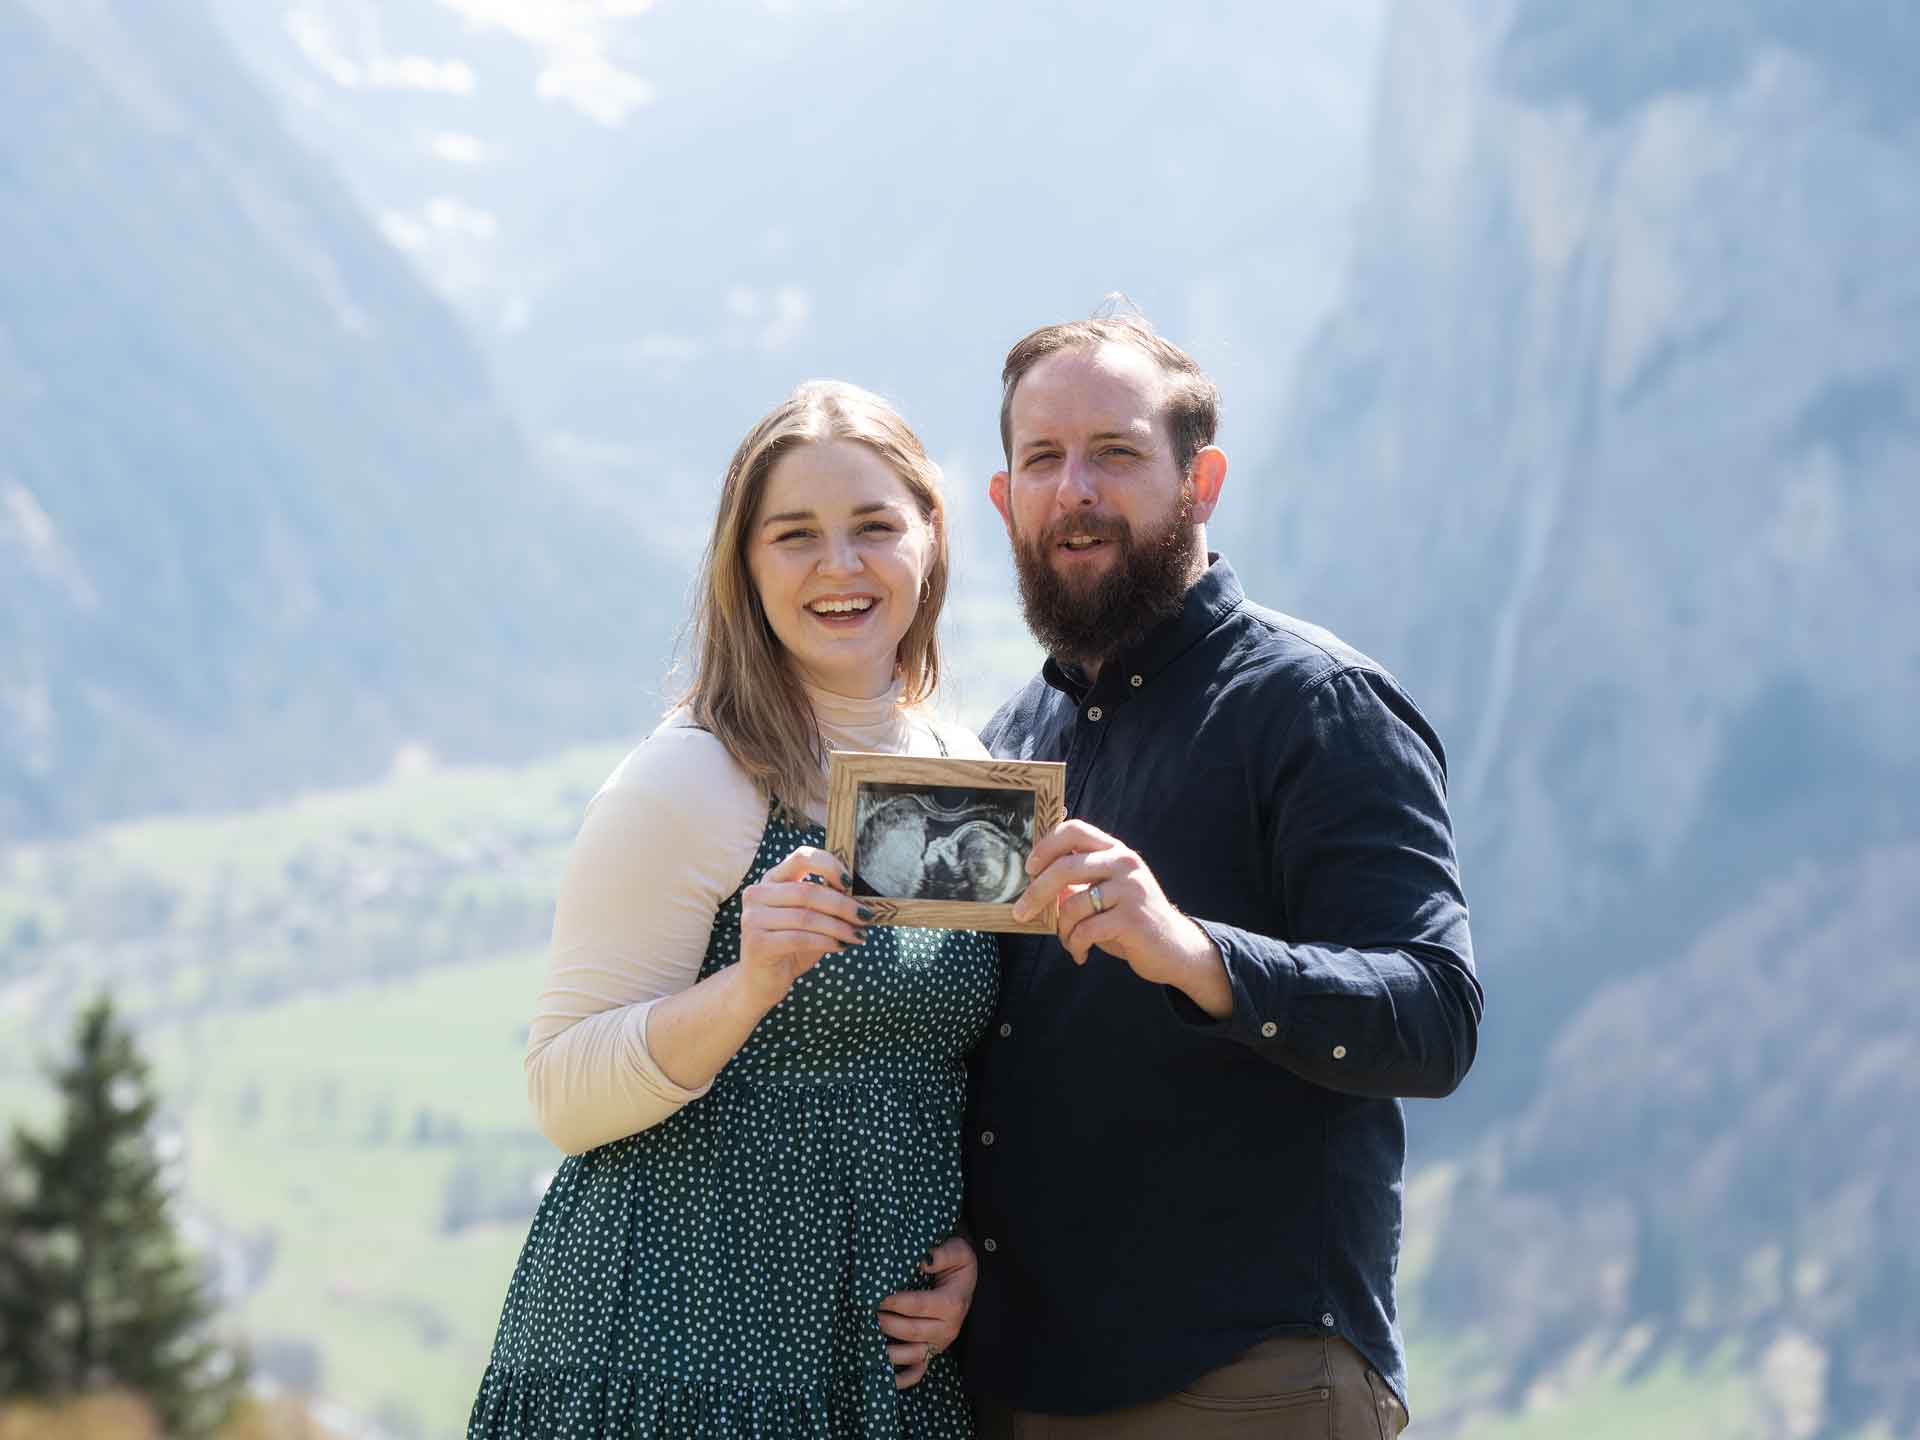 Pregnancy photoshoot in Switzerland with photographer John Wisdom